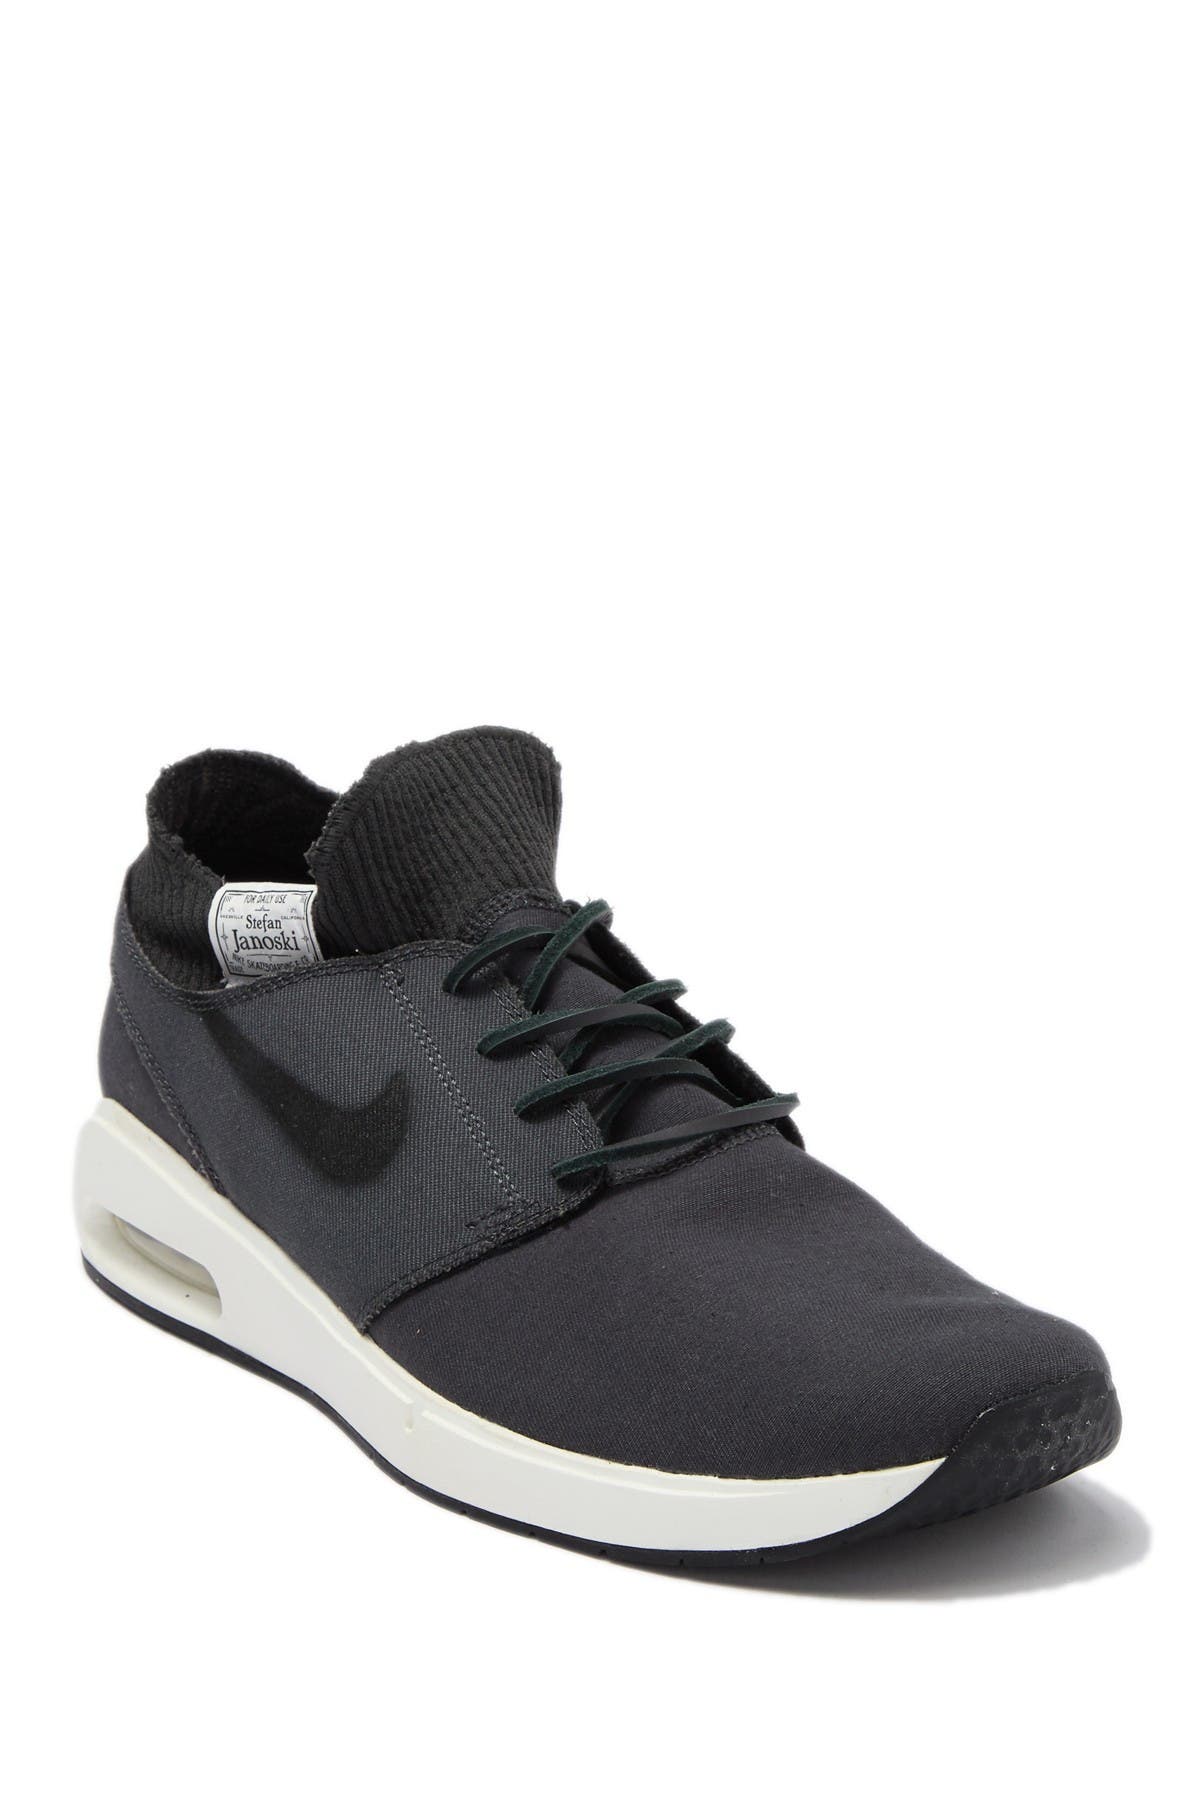 Nike | SB Air Max Stefan Janoski 2 Premium Sneaker | HauteLook